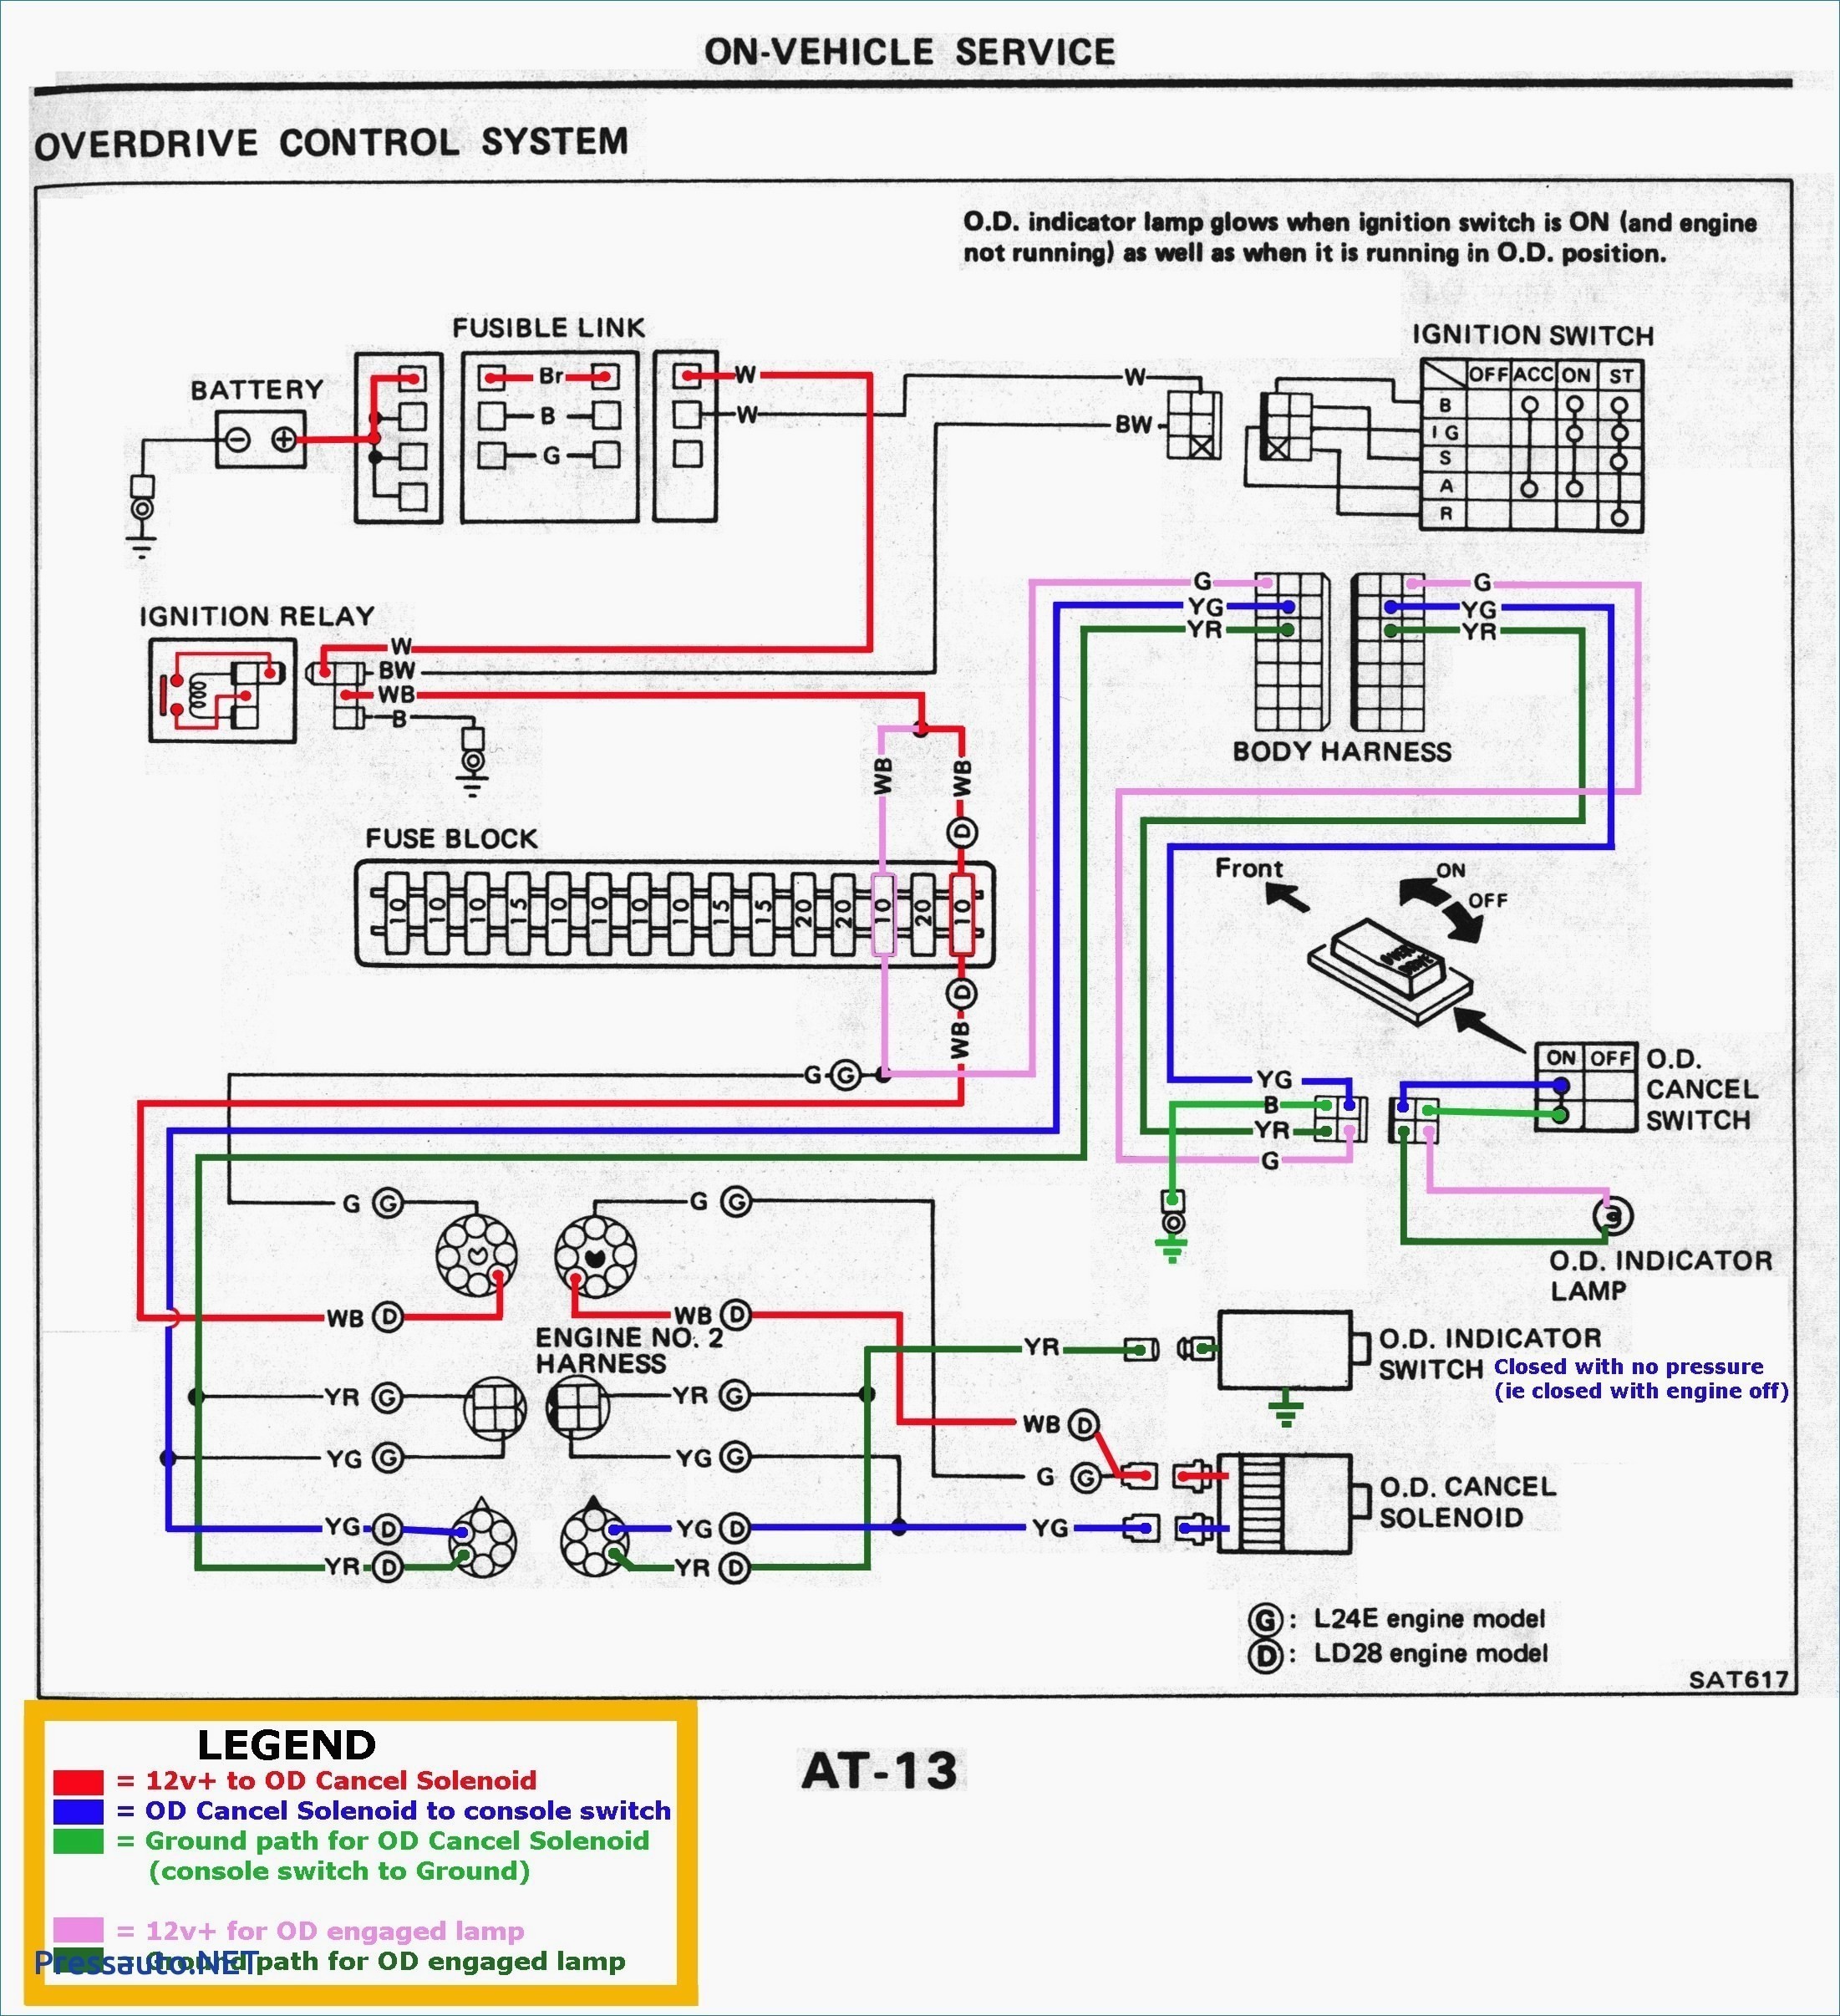 Honda atv Wiring Diagram Wiring Diagram Ignition Switch New Honda Civic Ignition Wiring Of Honda atv Wiring Diagram